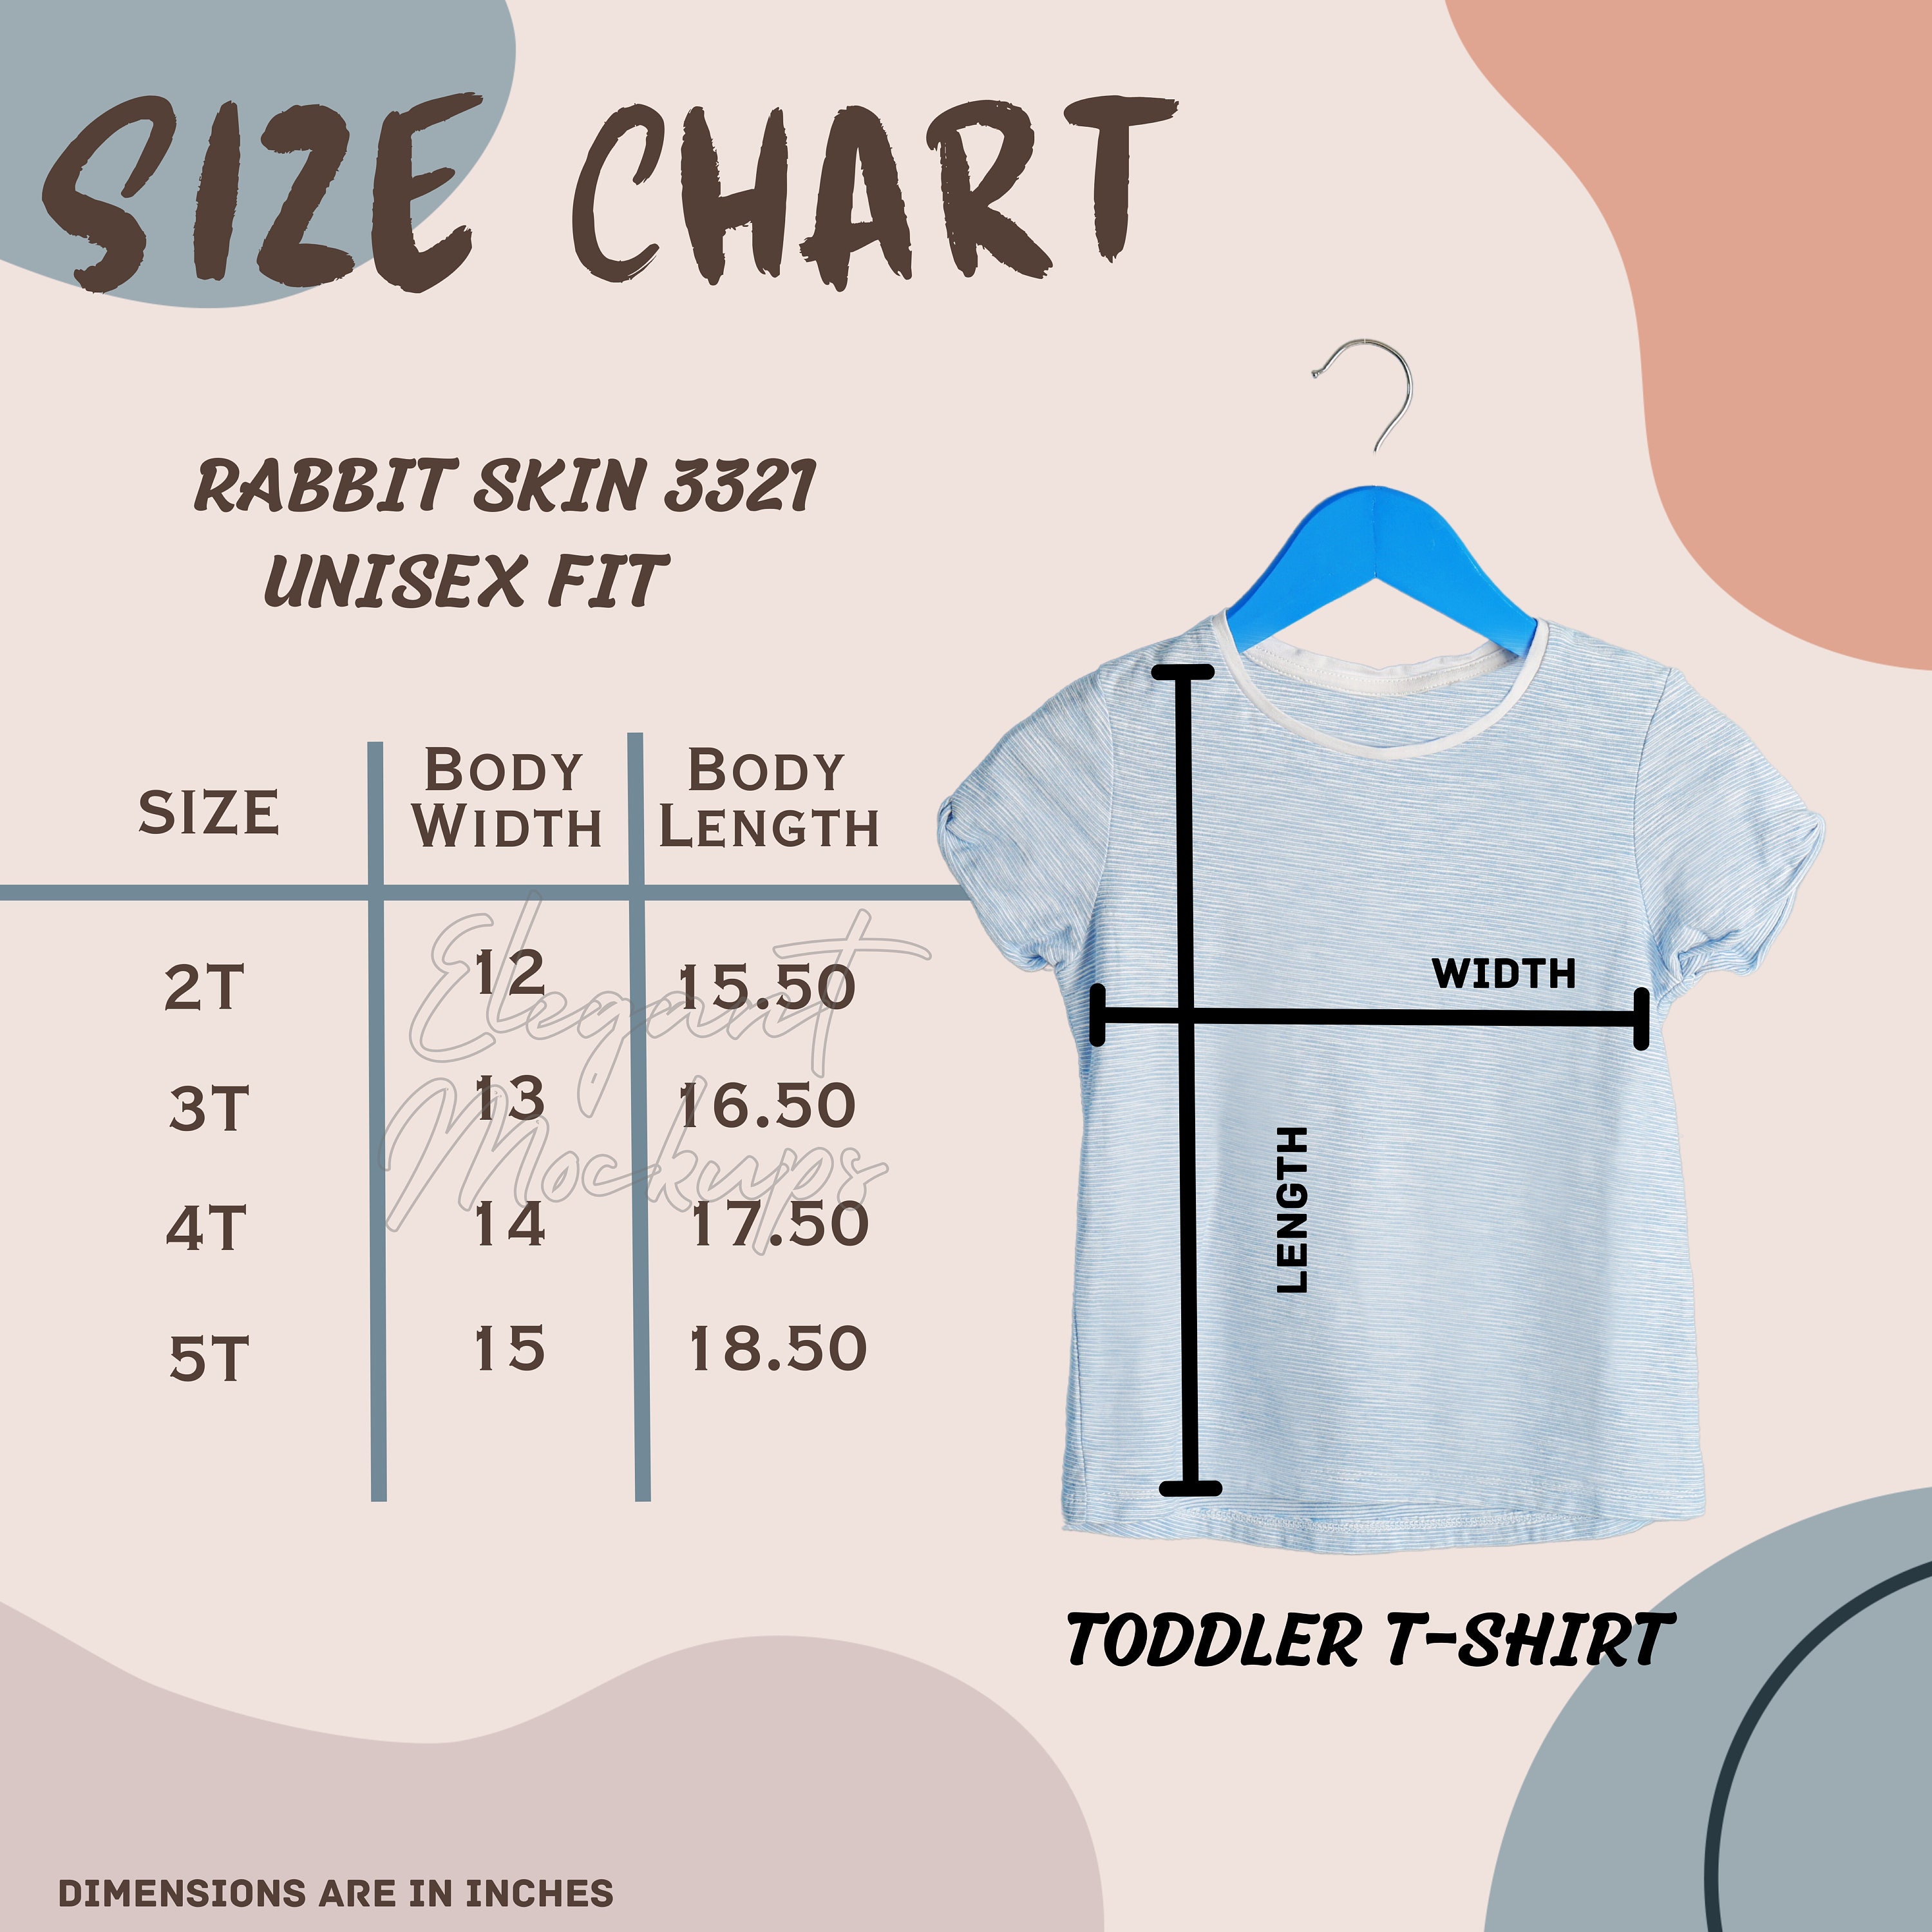 Rabbit Skins 3321 Color Chart Size Chart Rabbit Skins - Etsy